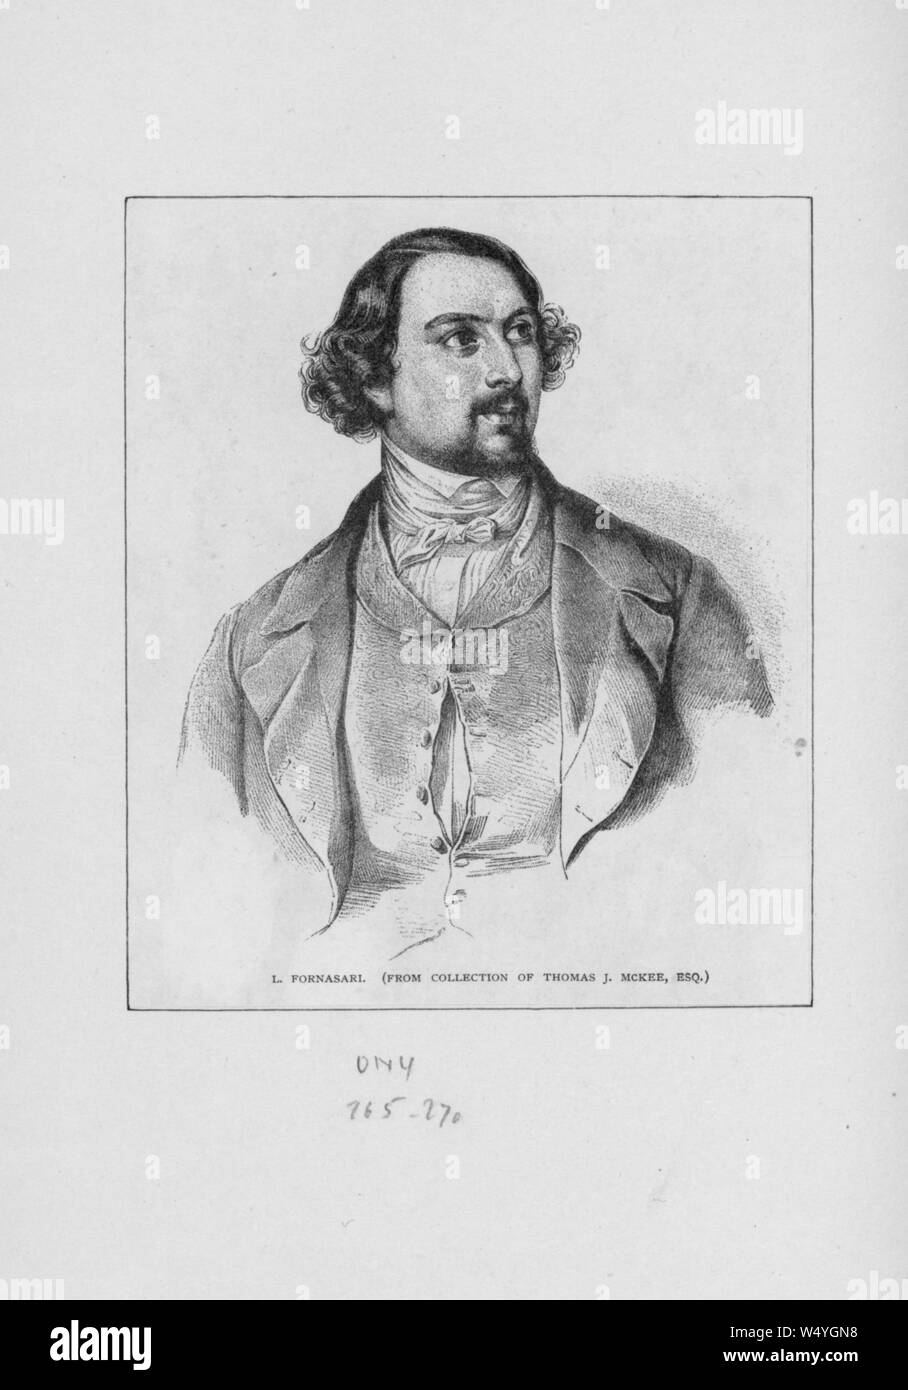 Engraved portrait of Luciano Fornasari, an Italian opera singer, 1800. () Stock Photo